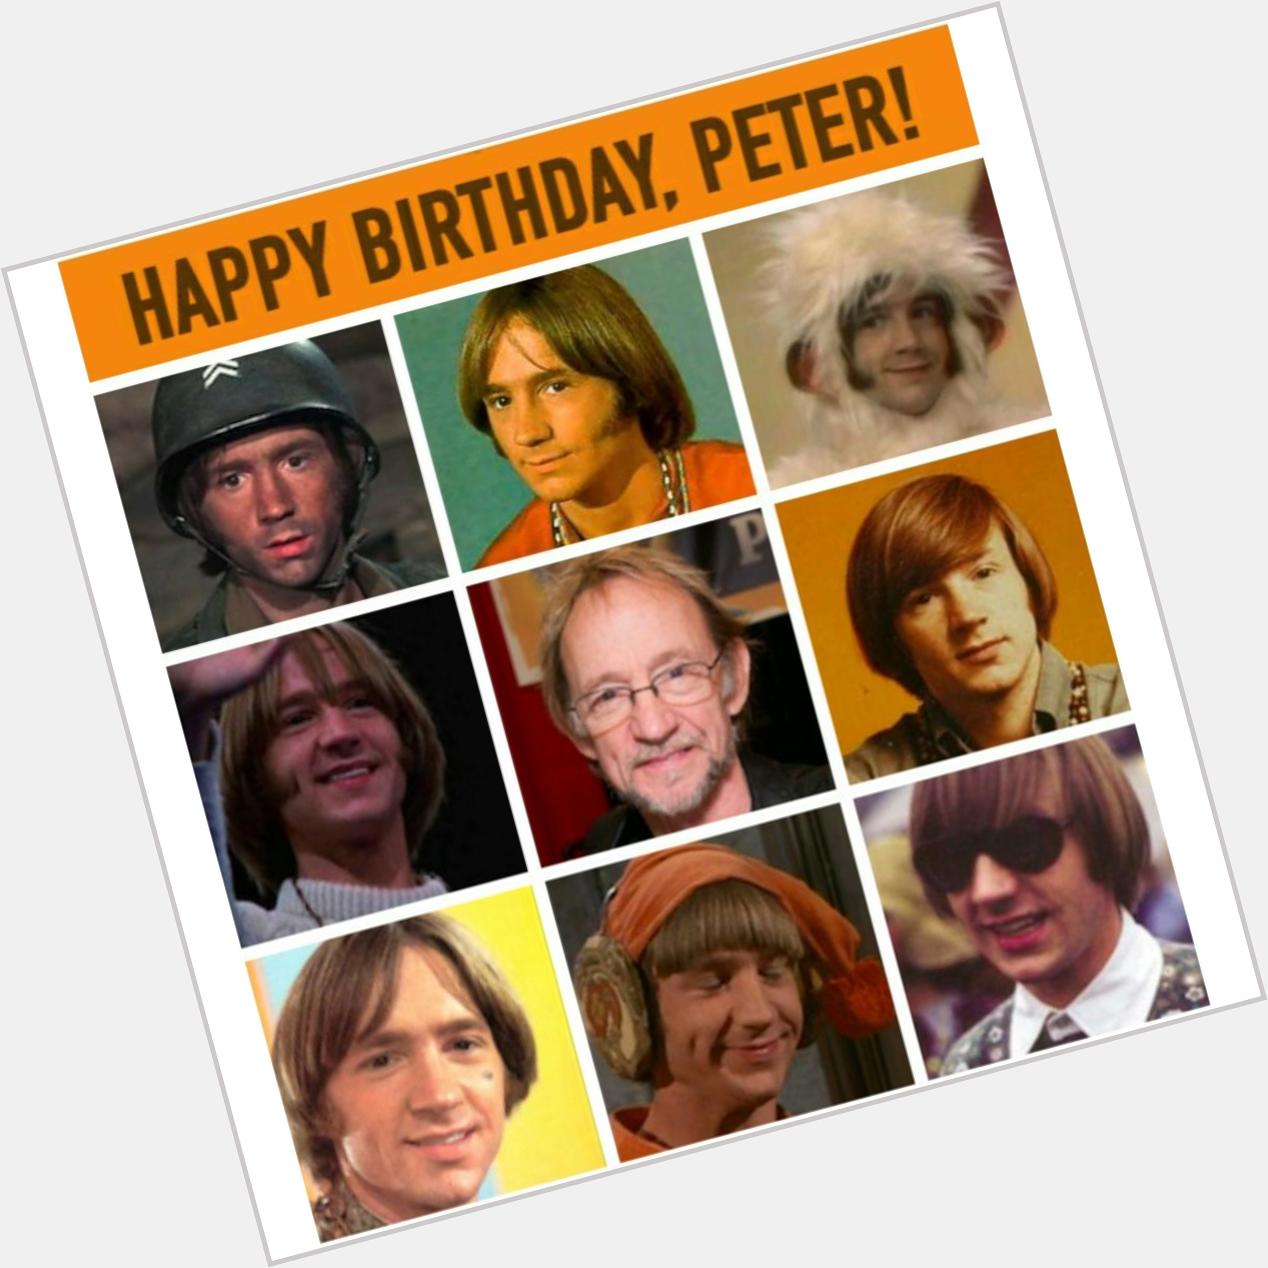 Happy birthday Peter Tork!   